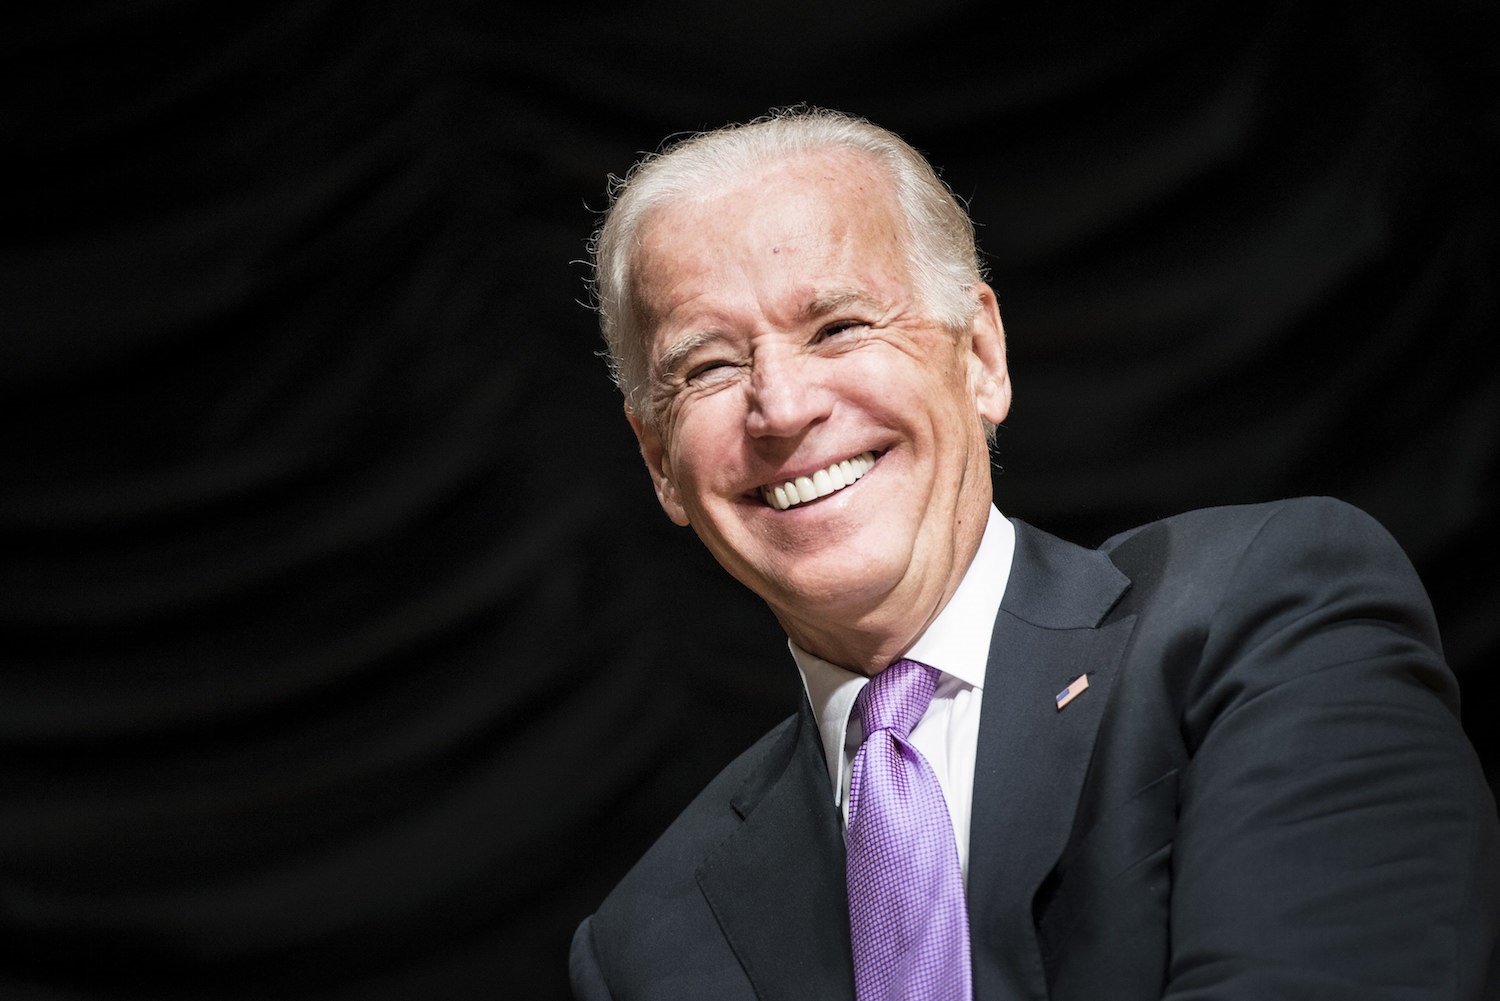 Former US Vice President Joe Biden addresses a Human Rights Campaign gala